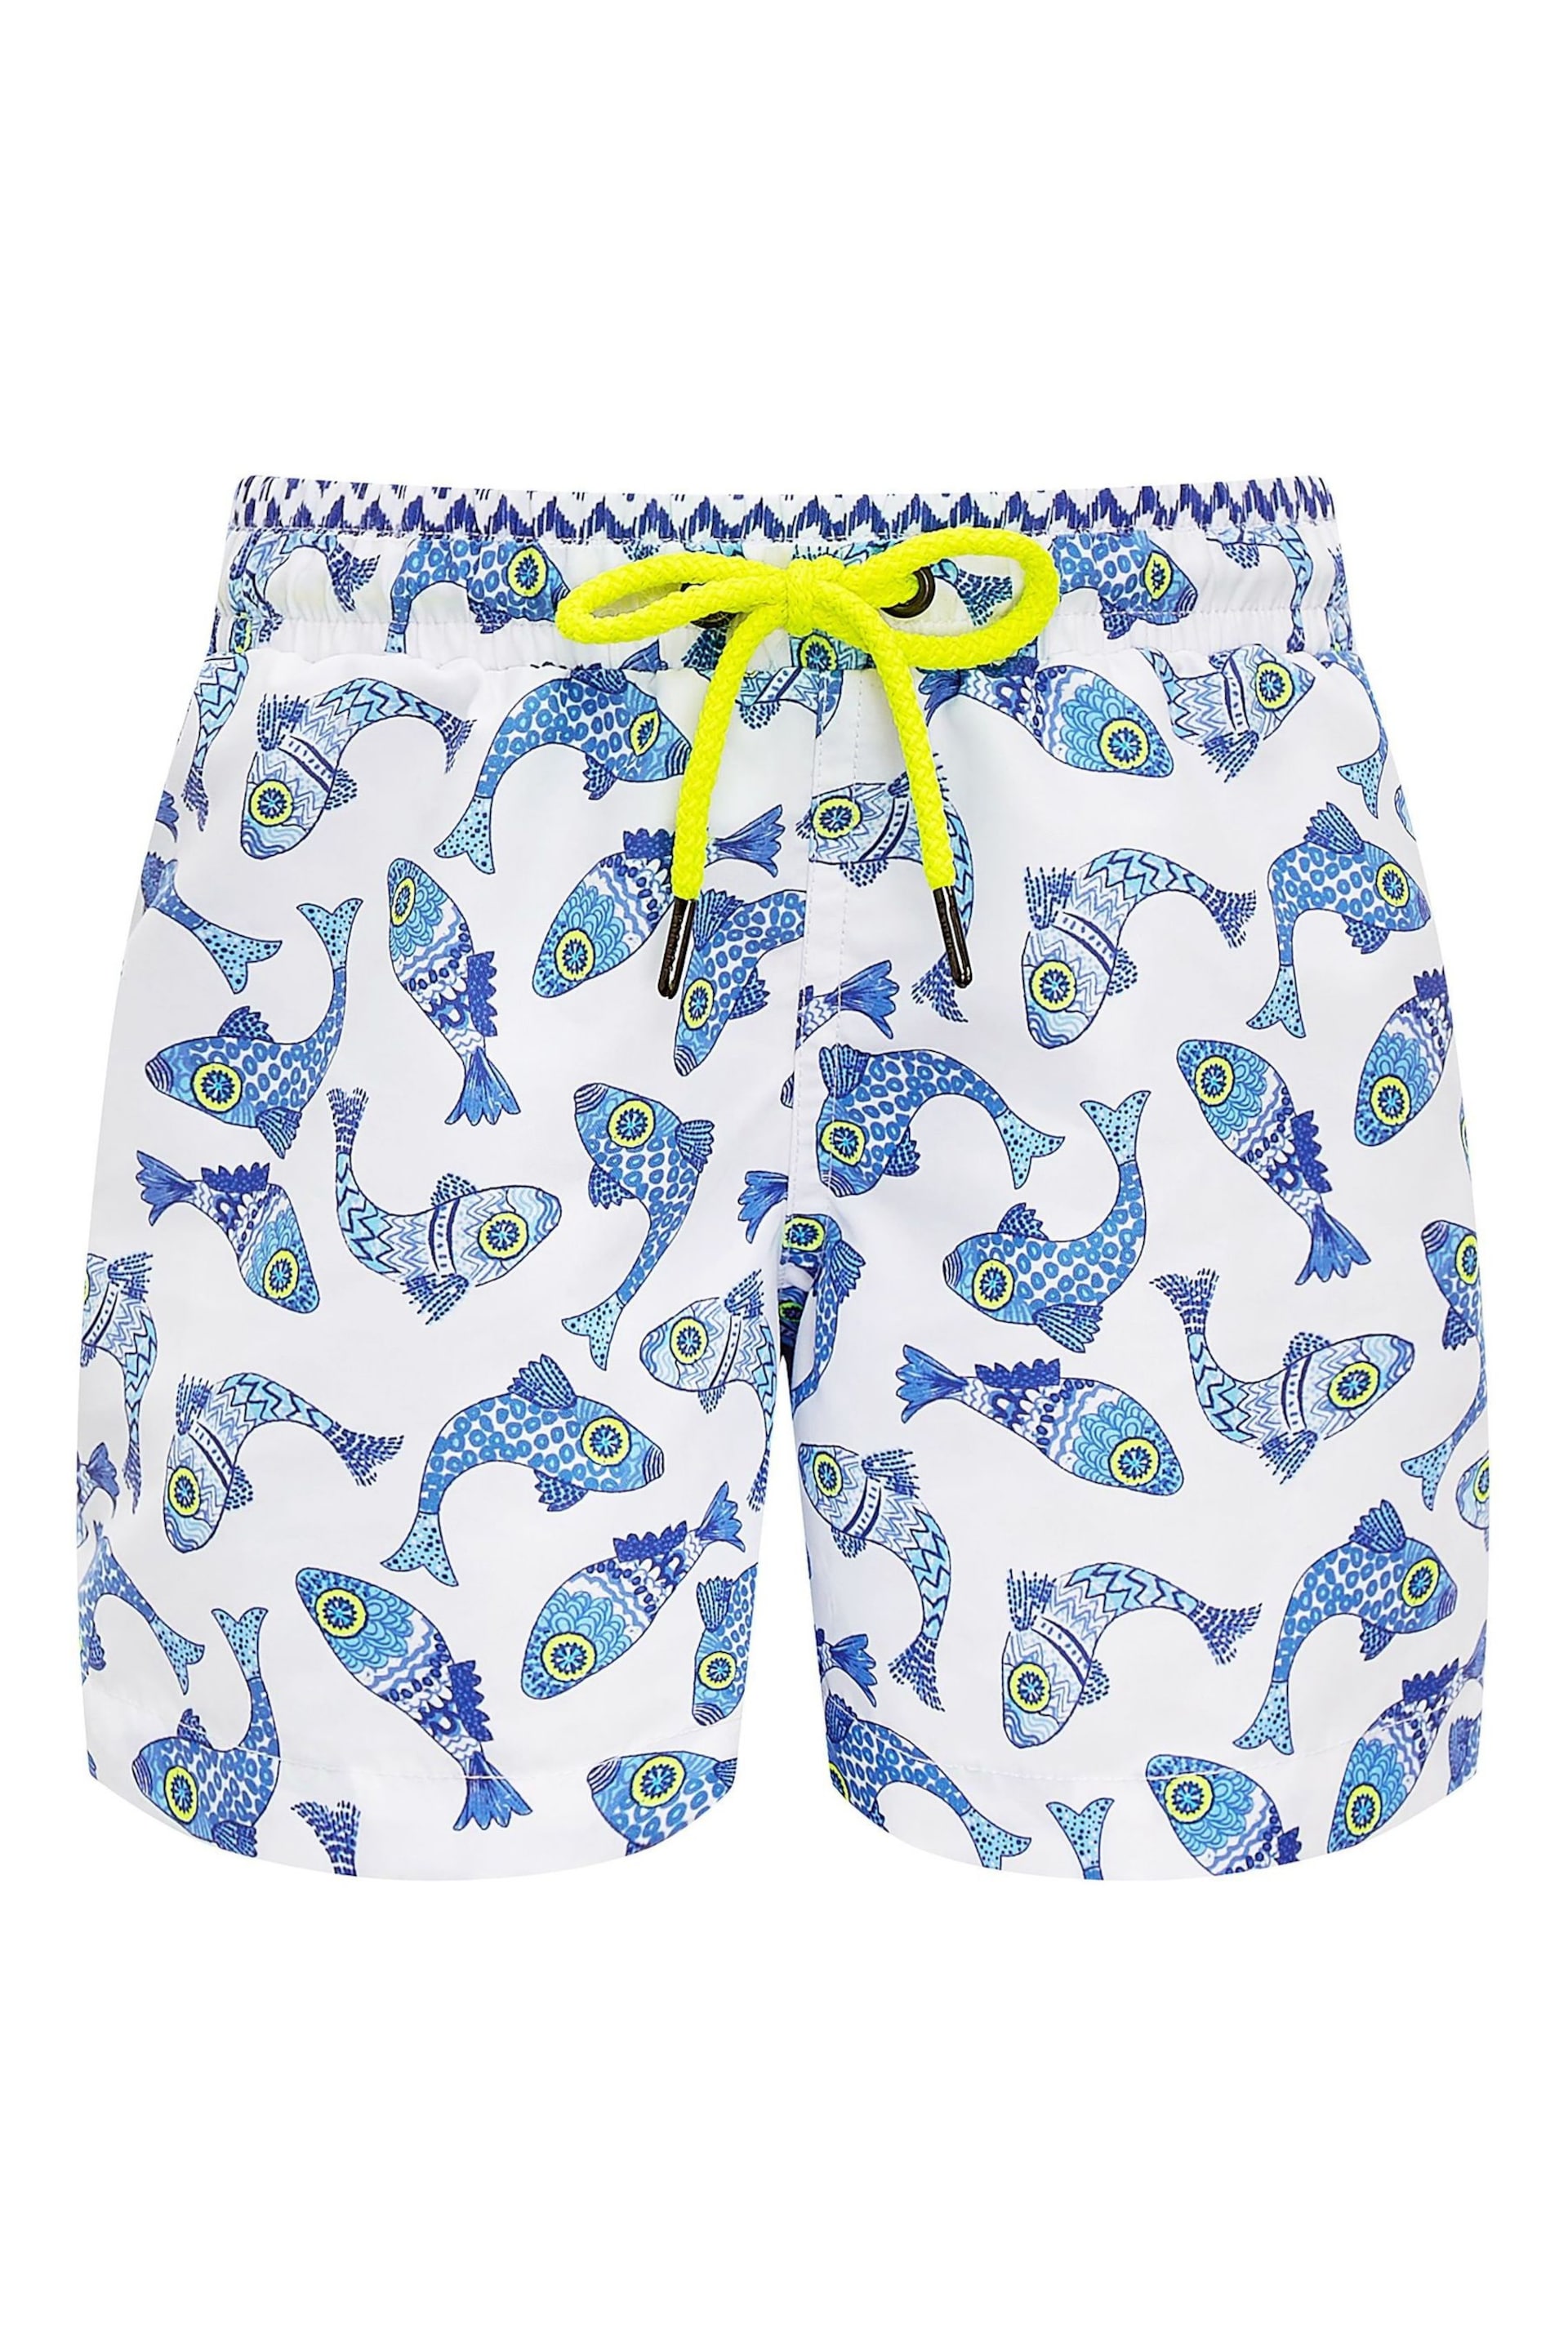 Sunuva Batik Fish Swim White Shorts - Image 1 of 3